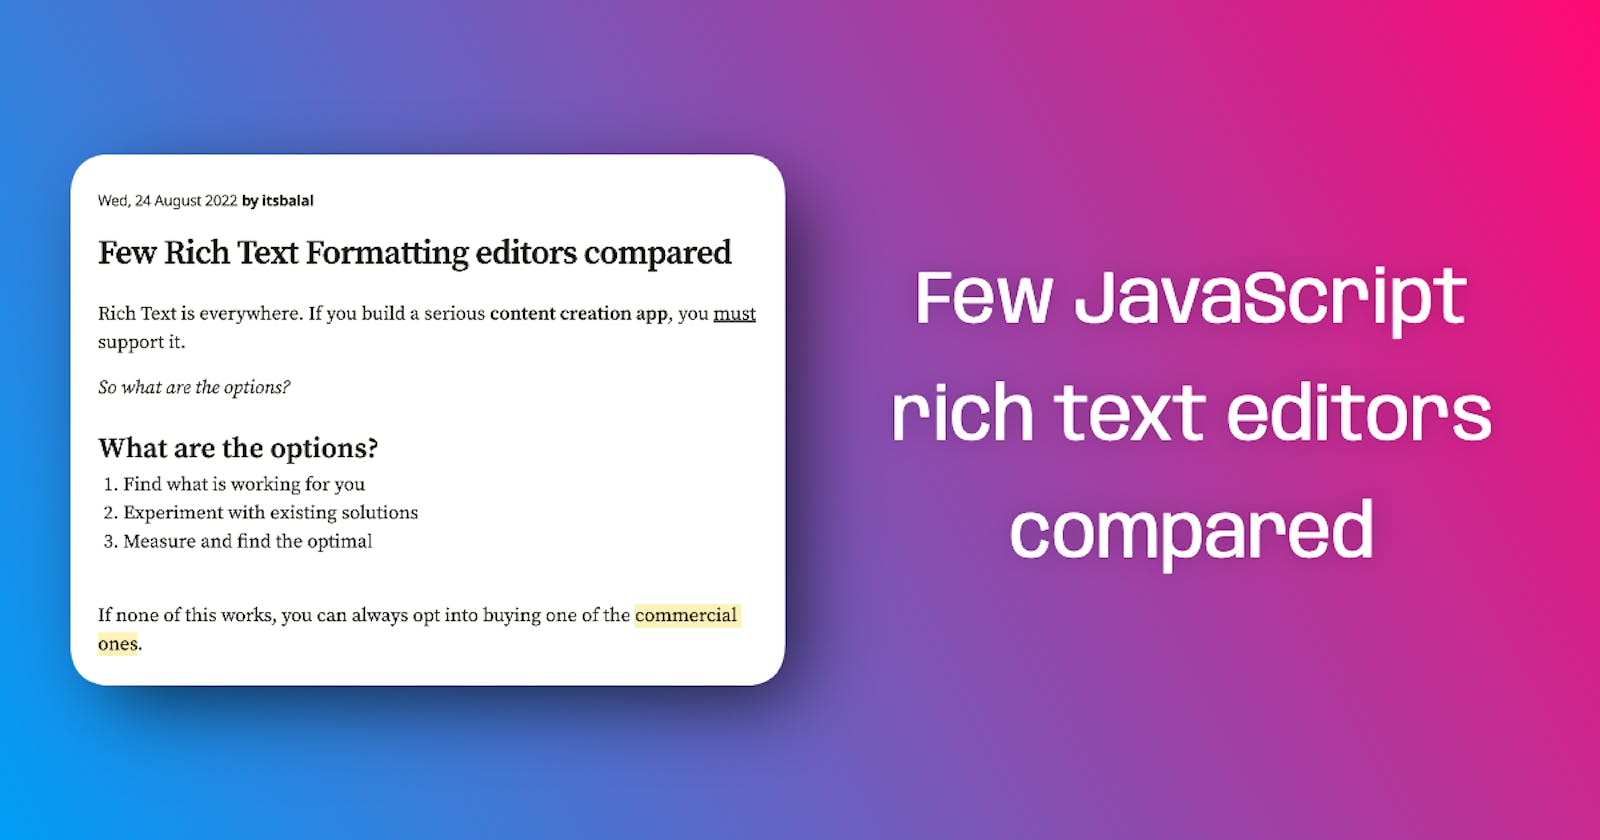 Few Rich Text Formatting editors compared